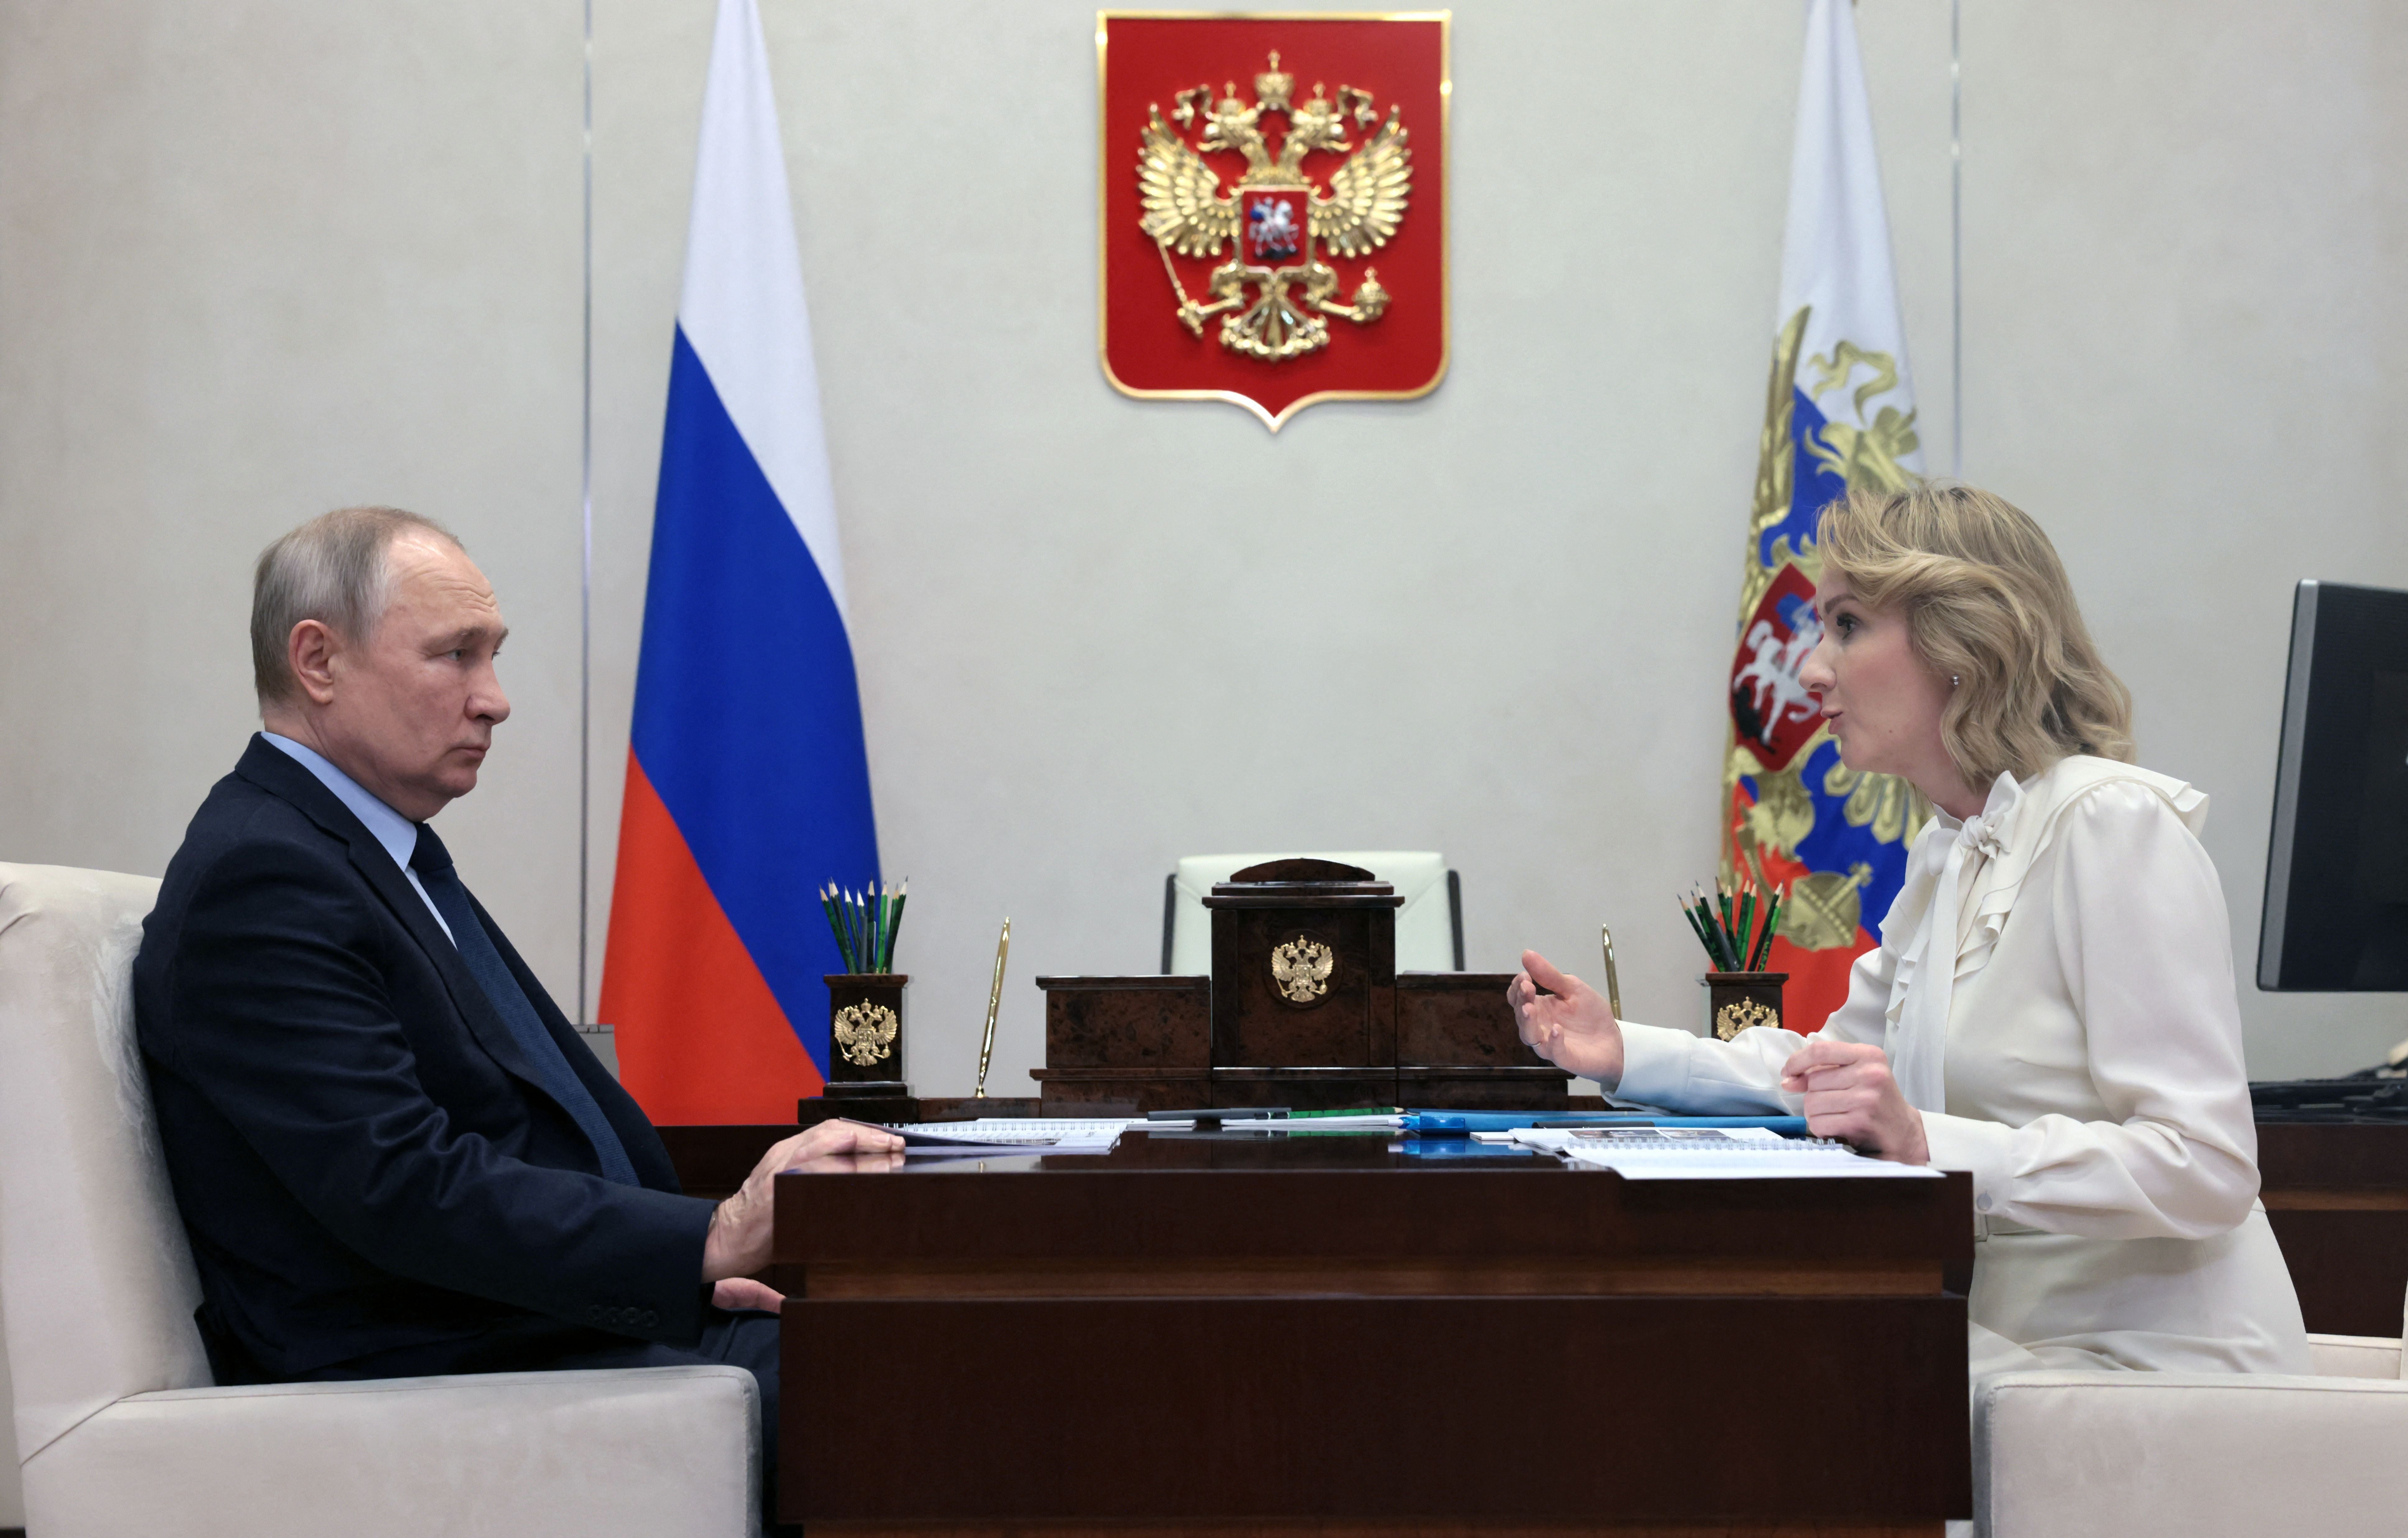 Putin meets with Maria Lvova-Belova – the International Criminal Court issued arrest warrants against both